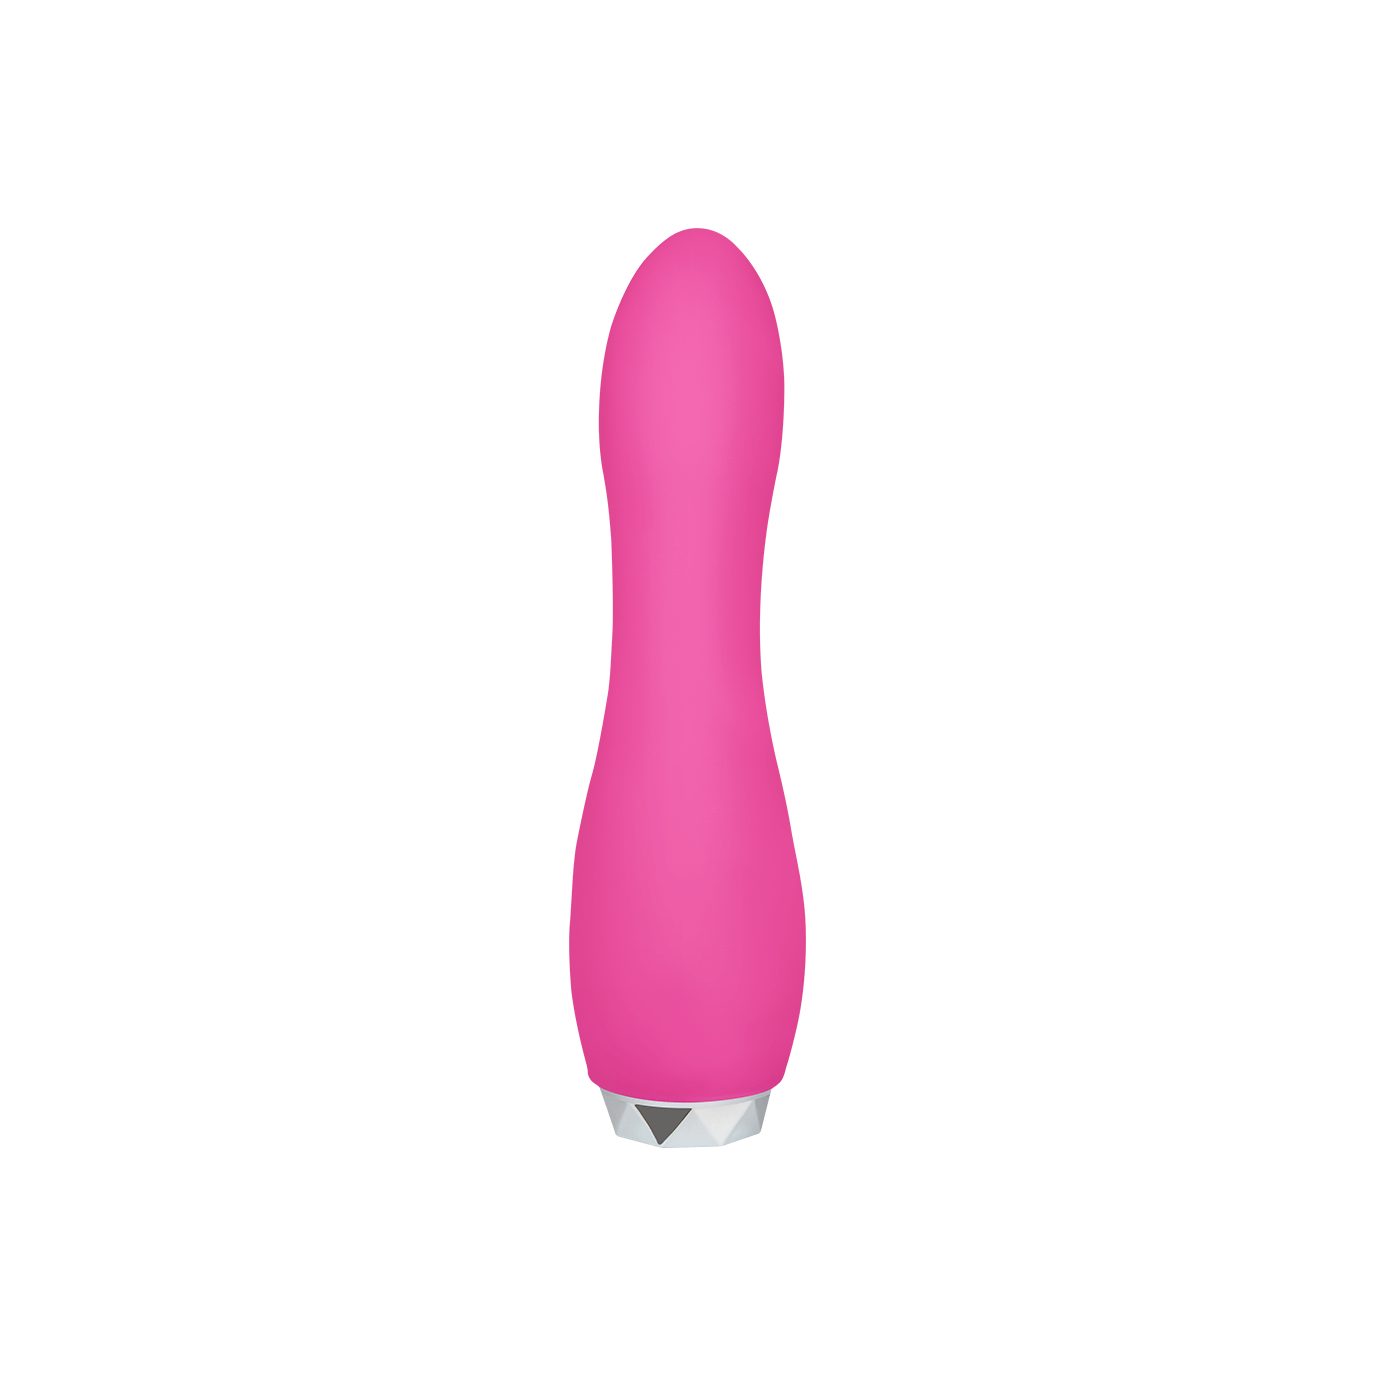 EIS wasserdicht aus Silikon, 15,5cm, G-Spot-Vibrator Klitoris-Stimulator EIS Vibrator,